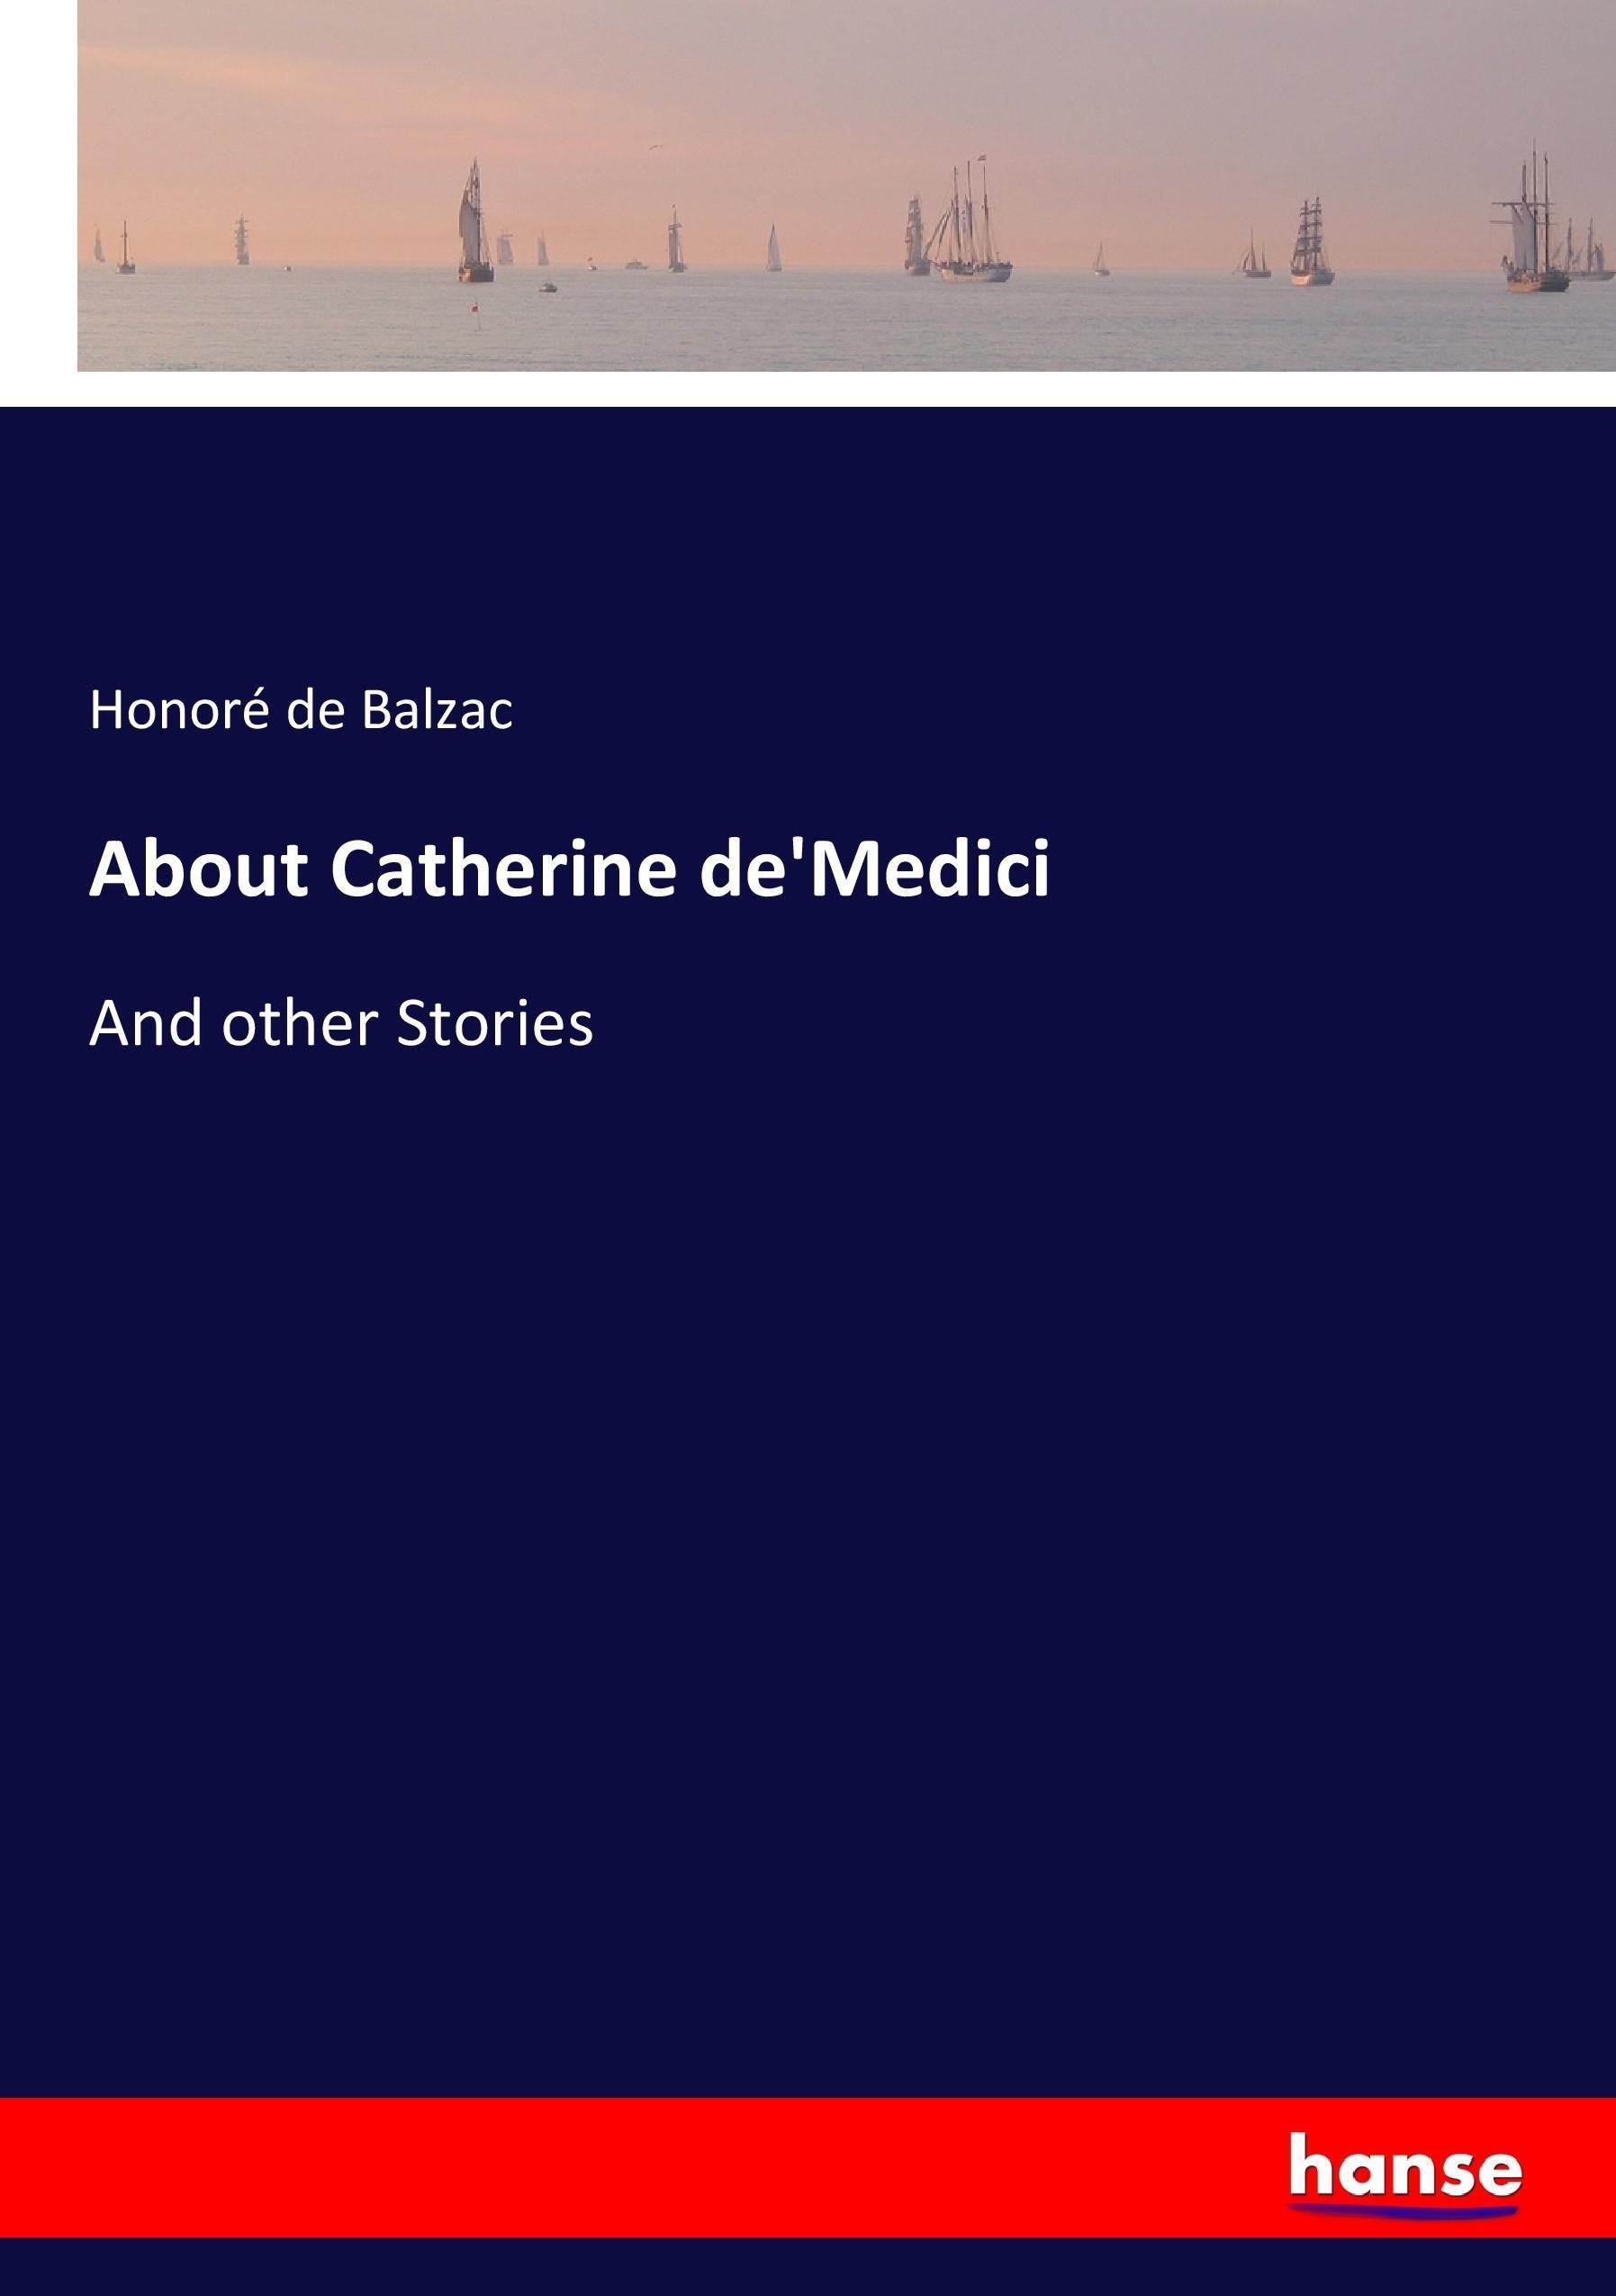 About Catherine de'Medici | And other Stories | Honoré de Balzac | Taschenbuch | Paperback | 428 S. | Englisch | 2017 | hansebooks | EAN 9783744751247 - Balzac, Honoré de